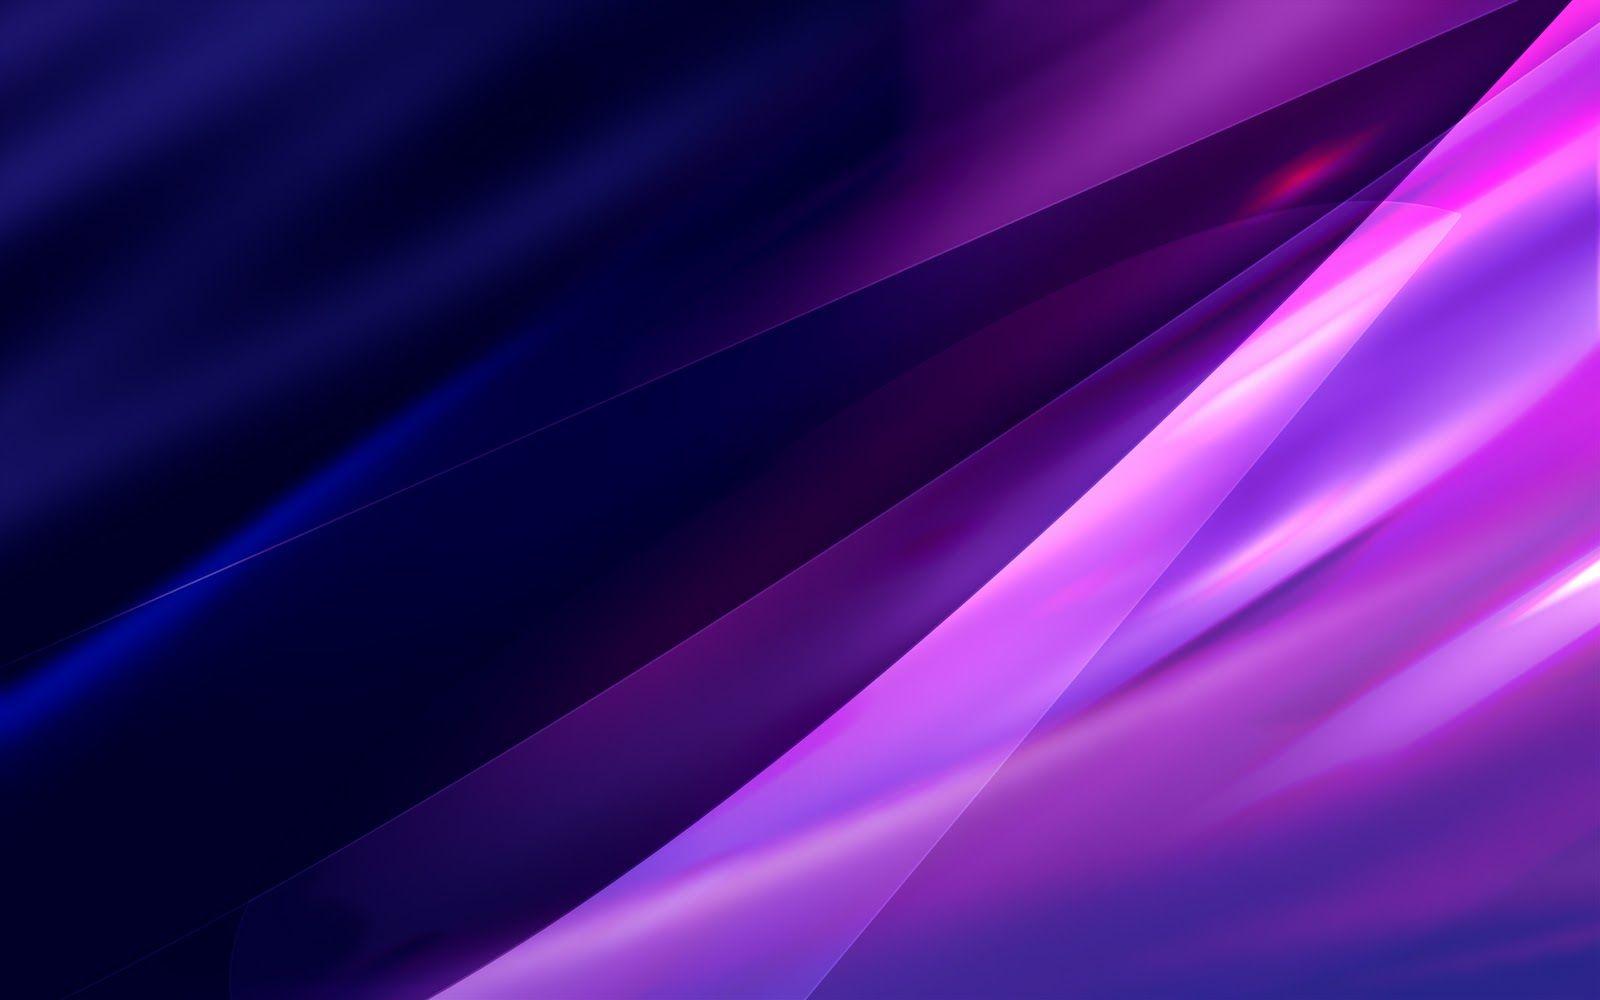 Free Purple Background 18531 1600x1200 px